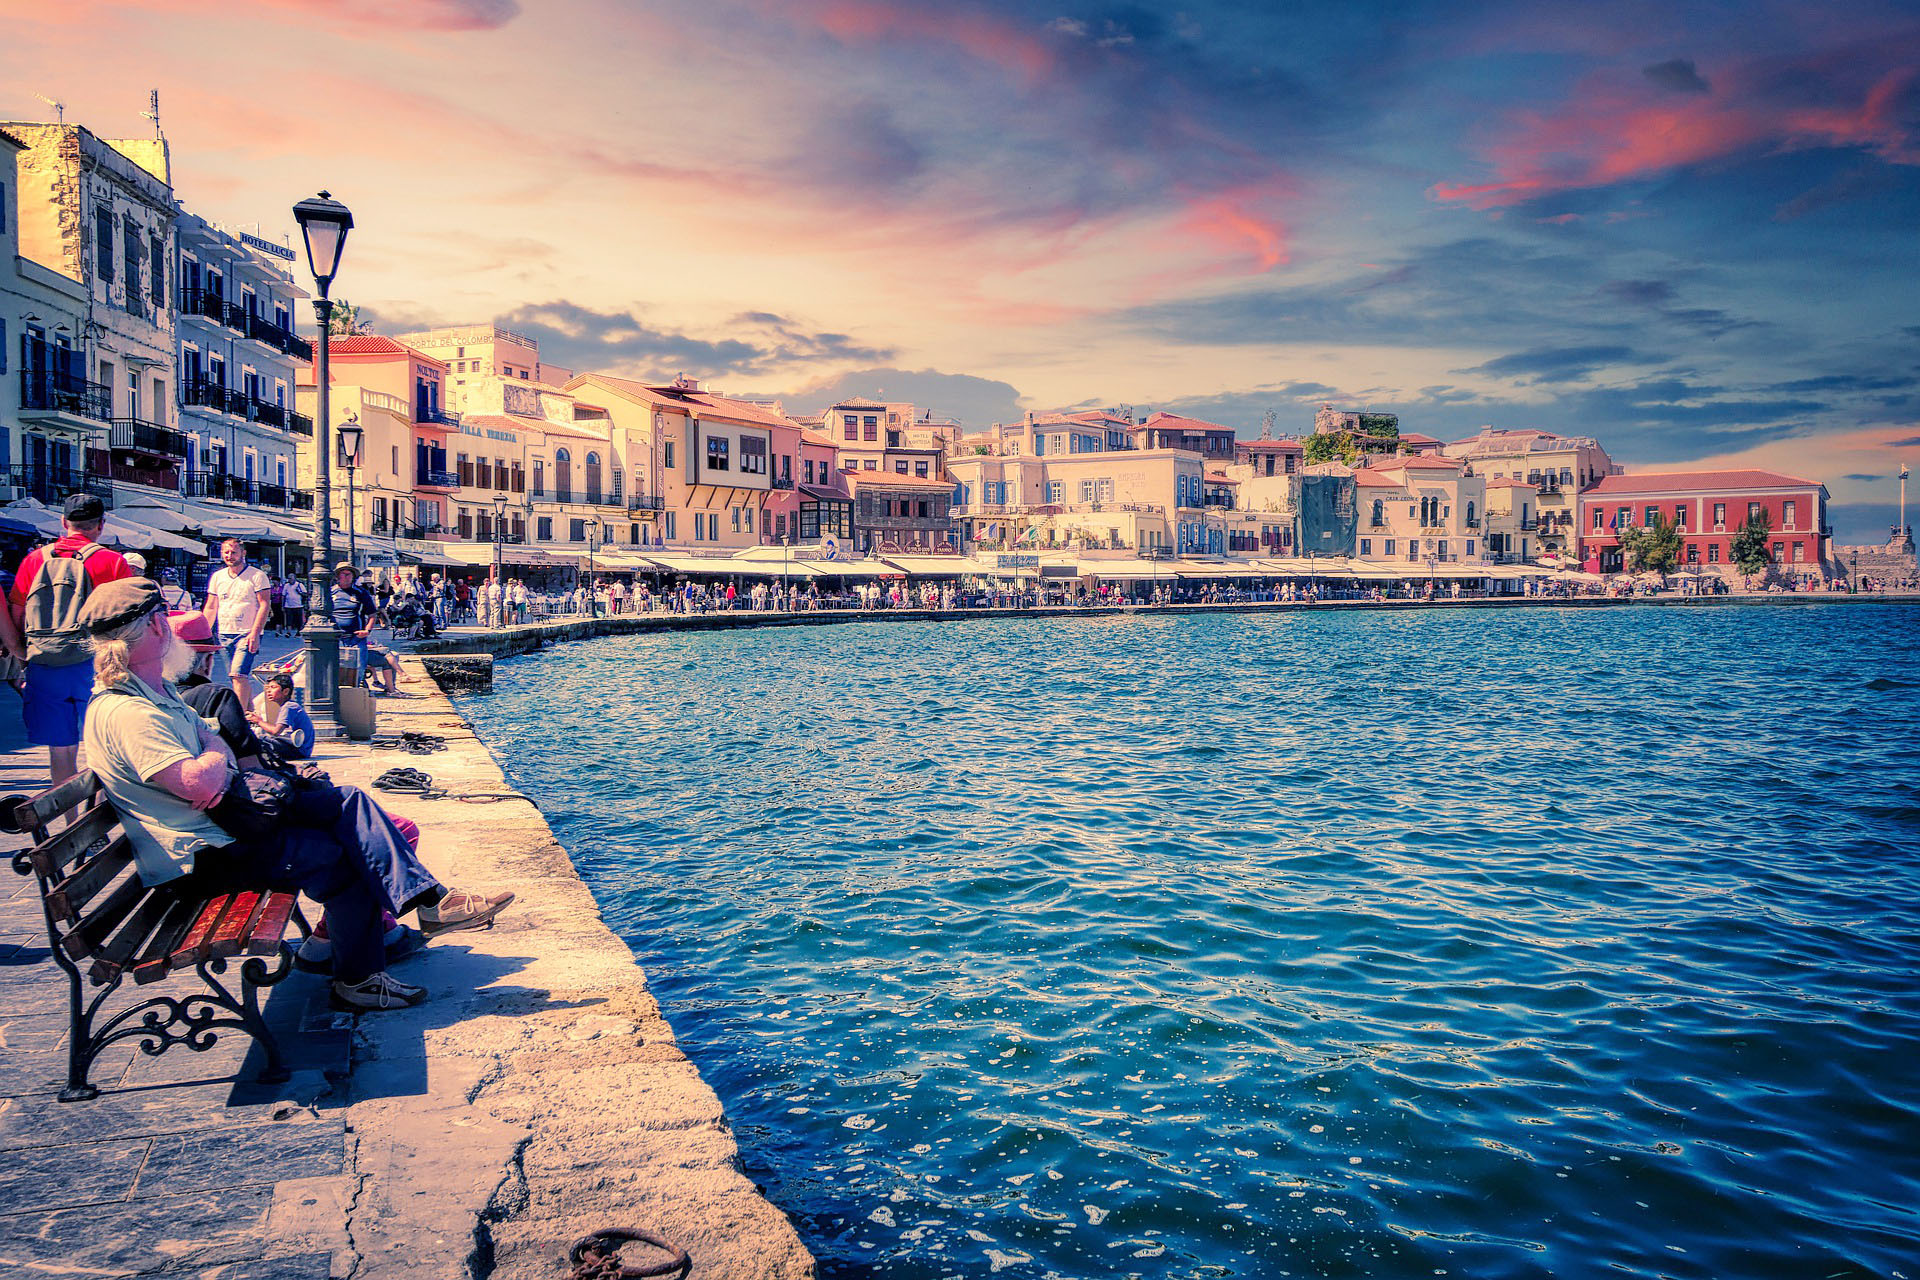 The Venetian Port, Chania, Crete